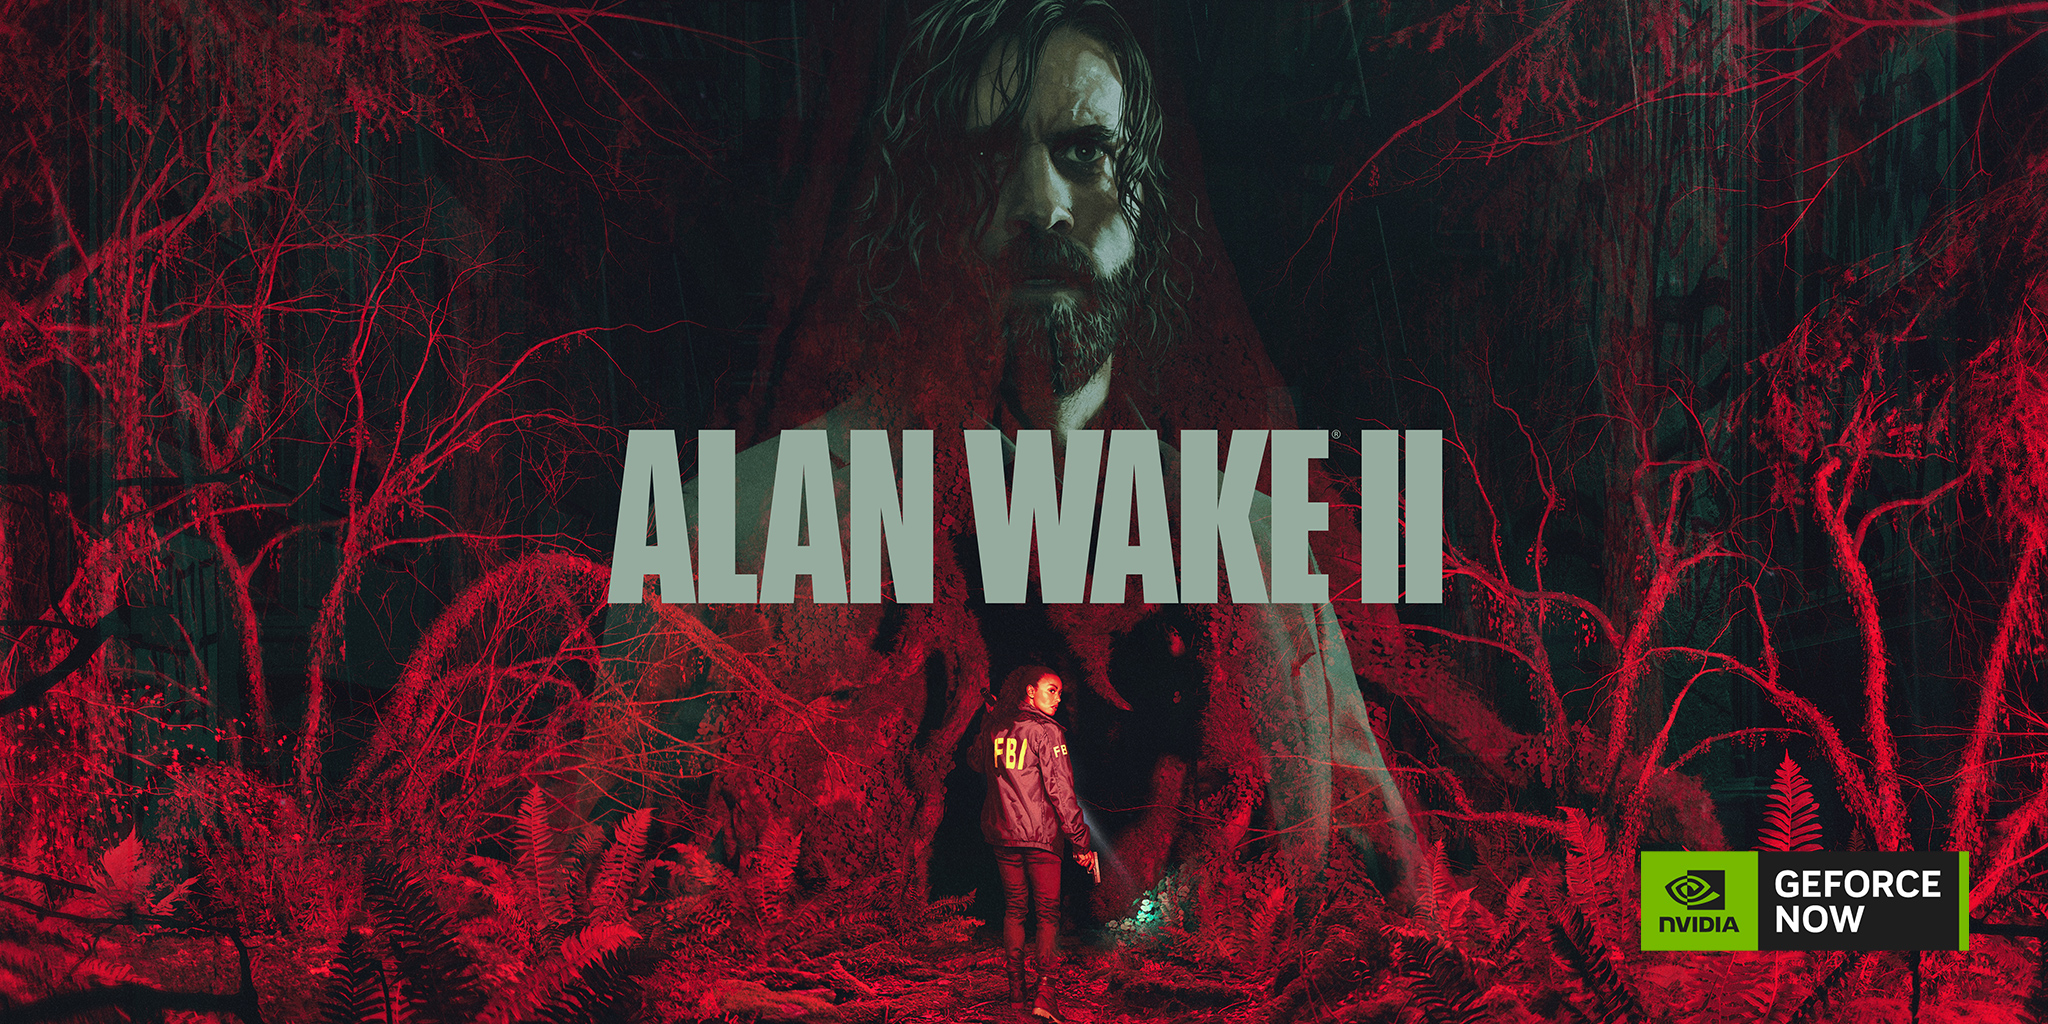 Alan Wake 2 Illuminates The Game Awards 2023 with Triple Triumph — Alan Wake